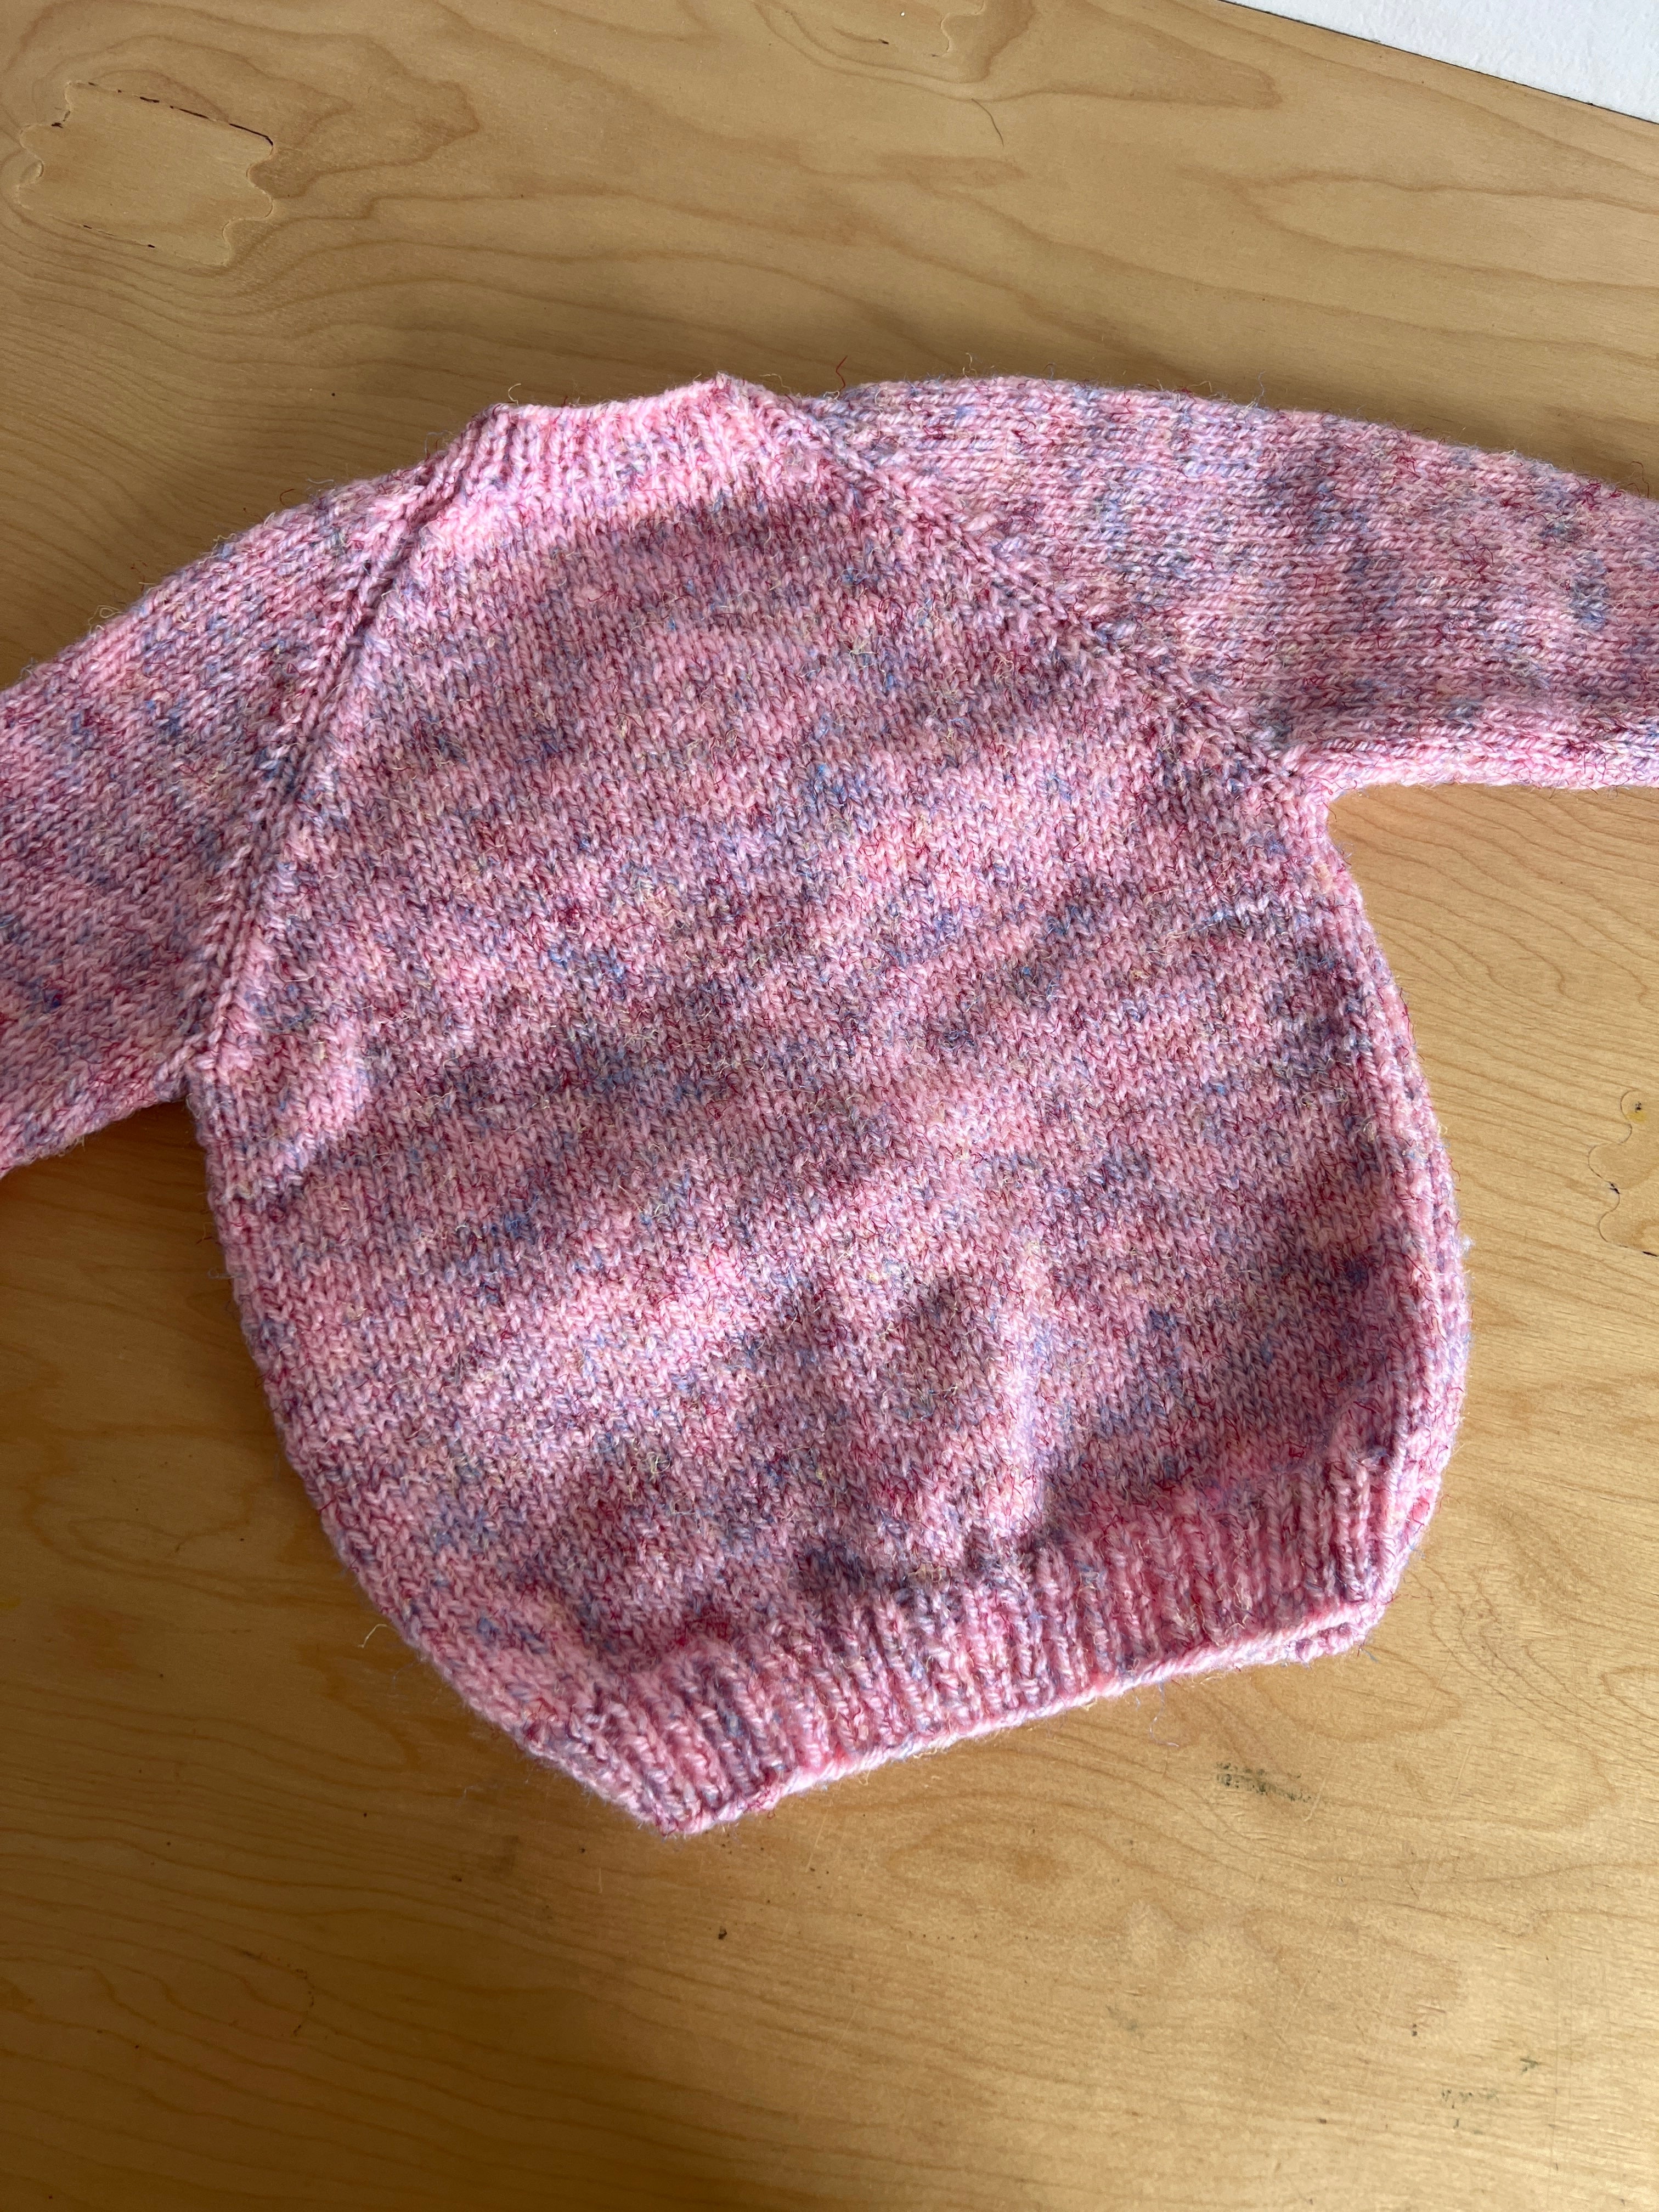 6-12 months | Hand Knit